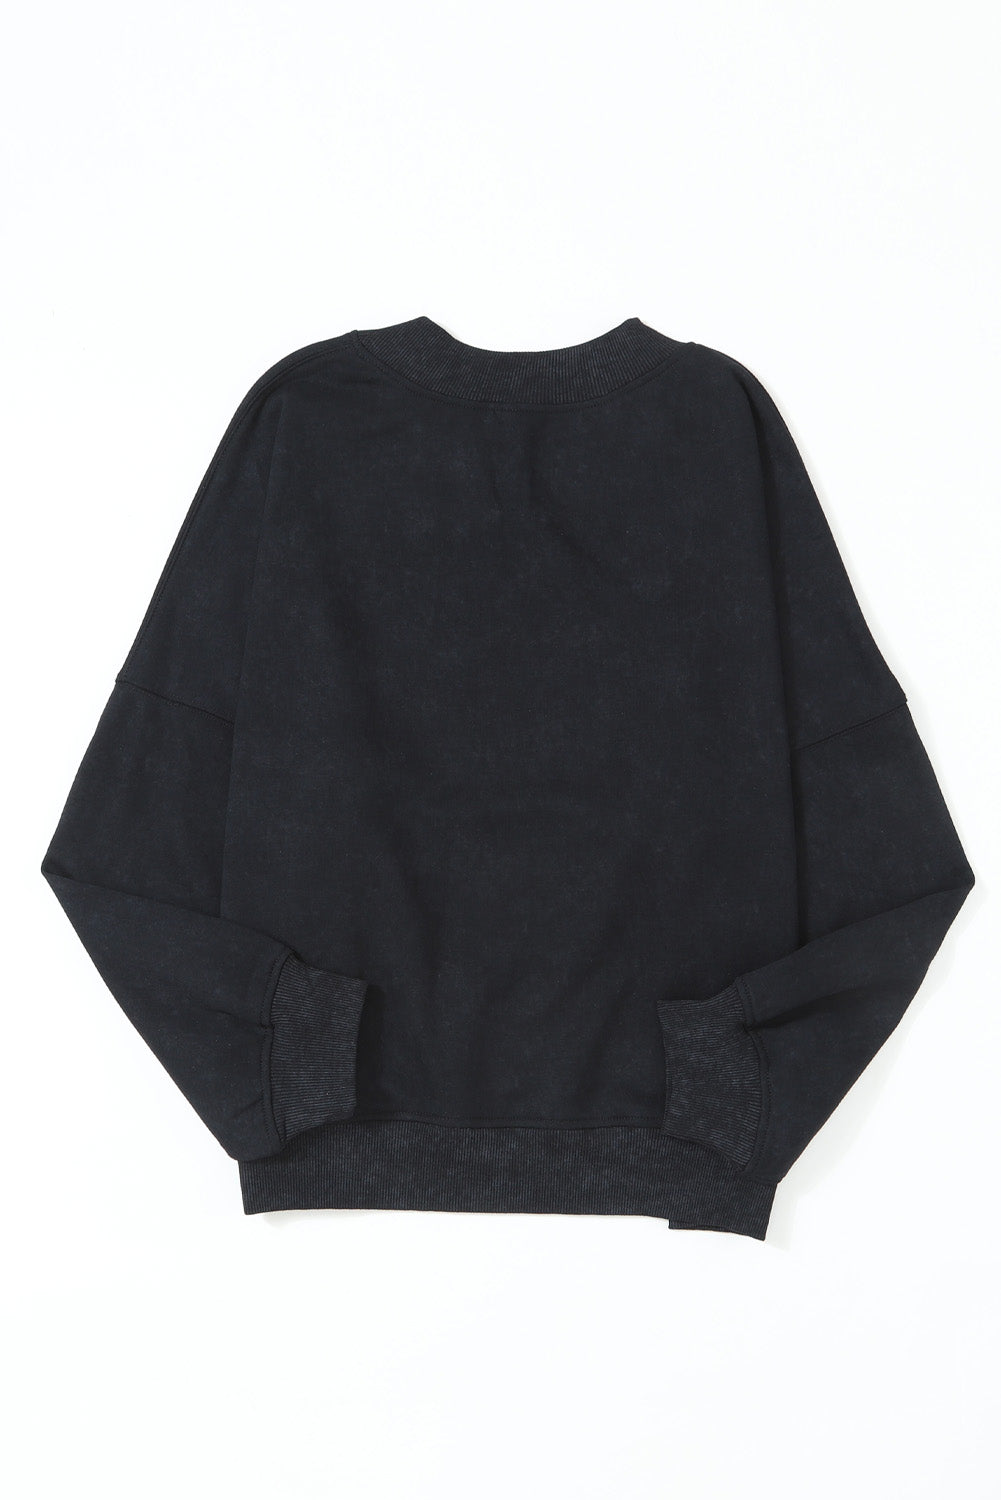 Black Plain Drop Shoulder Crew Neck Pullover Sweatshirt